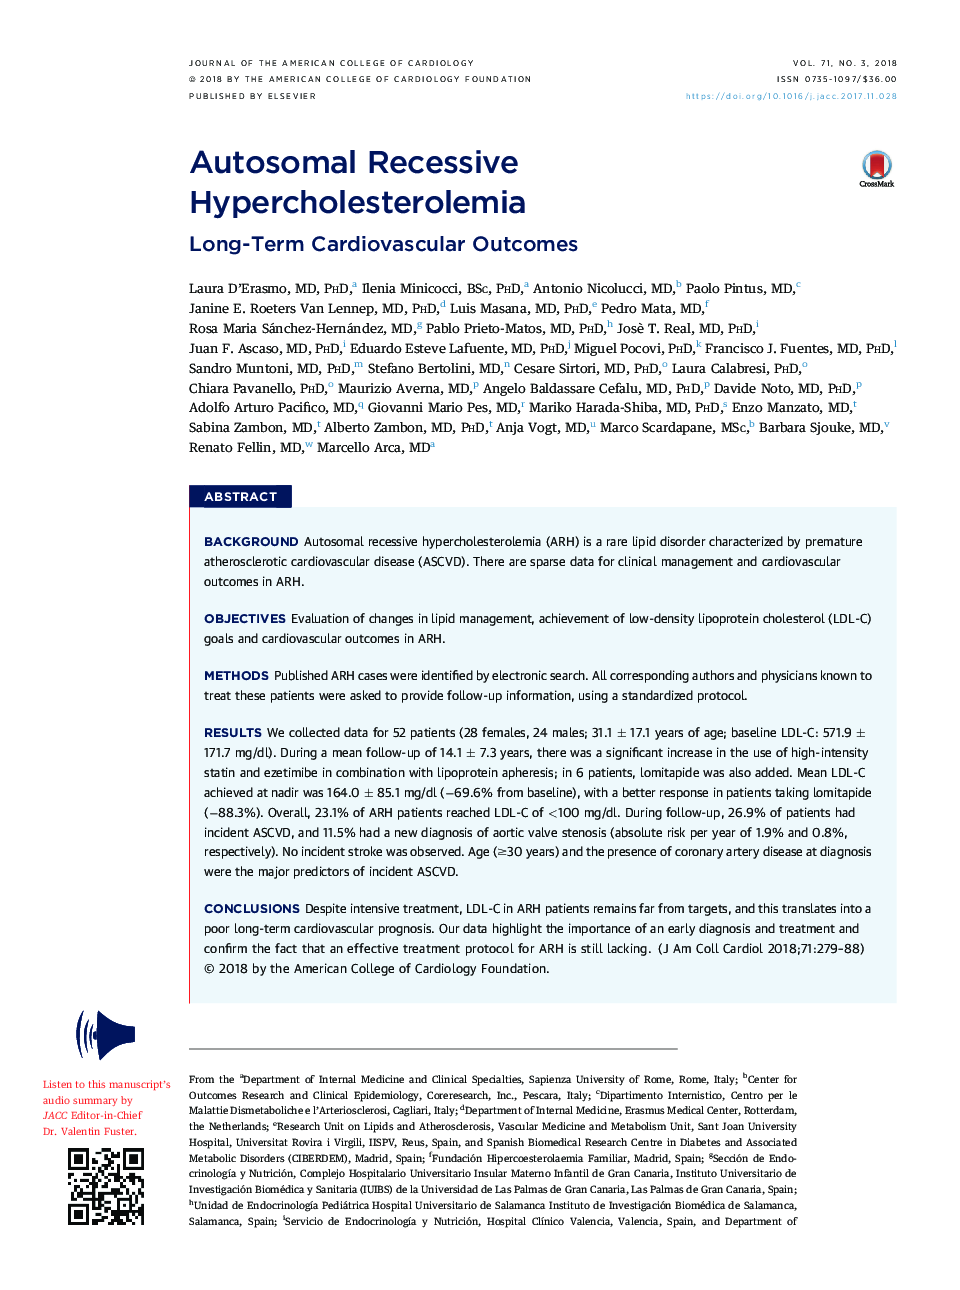 Autosomal Recessive Hypercholesterolemia